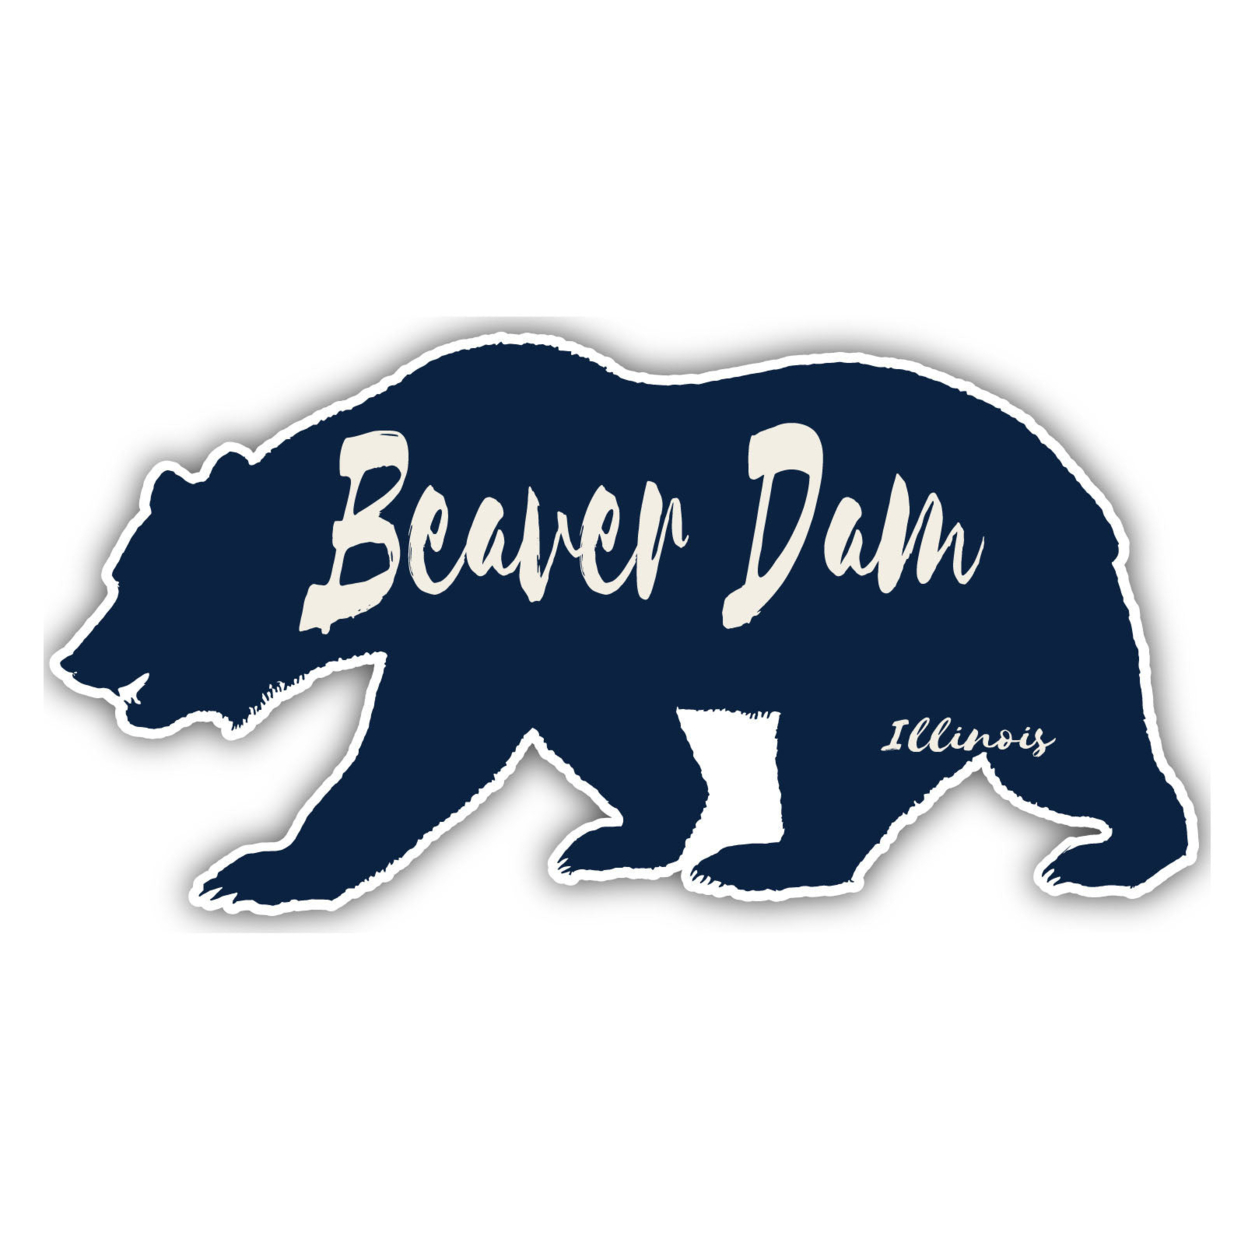 Beaver Dam Illinois Souvenir Decorative Stickers (Choose Theme And Size) - Single Unit, 10-Inch, Bear